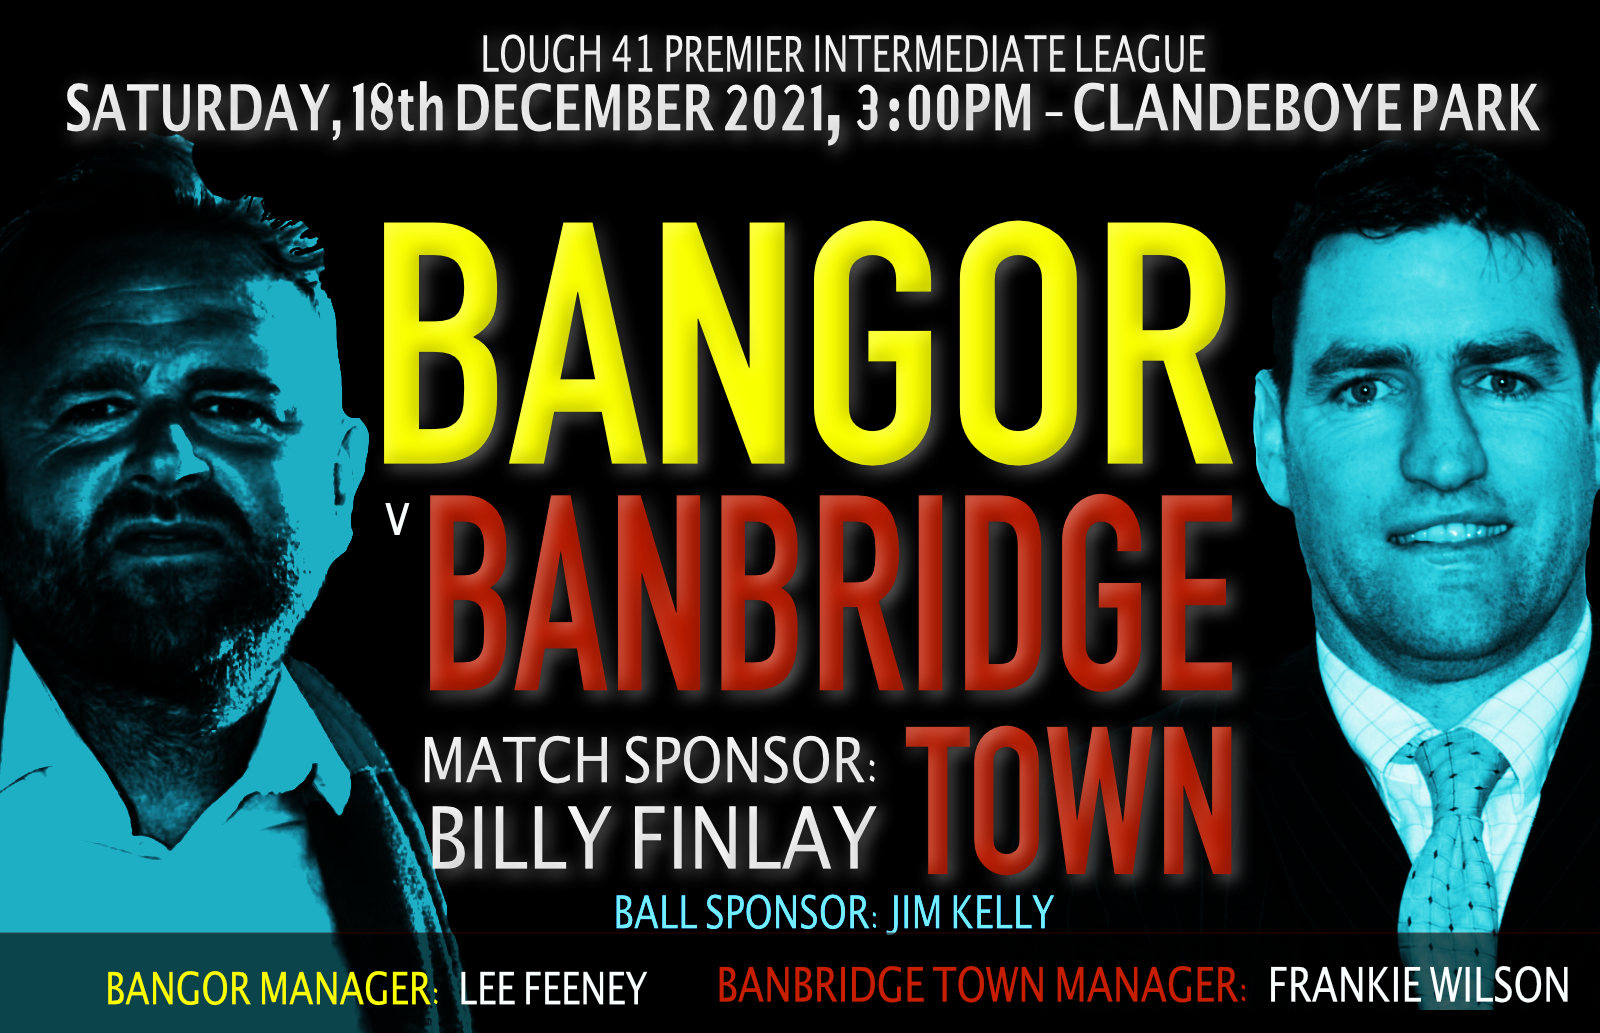 Banbridge Town